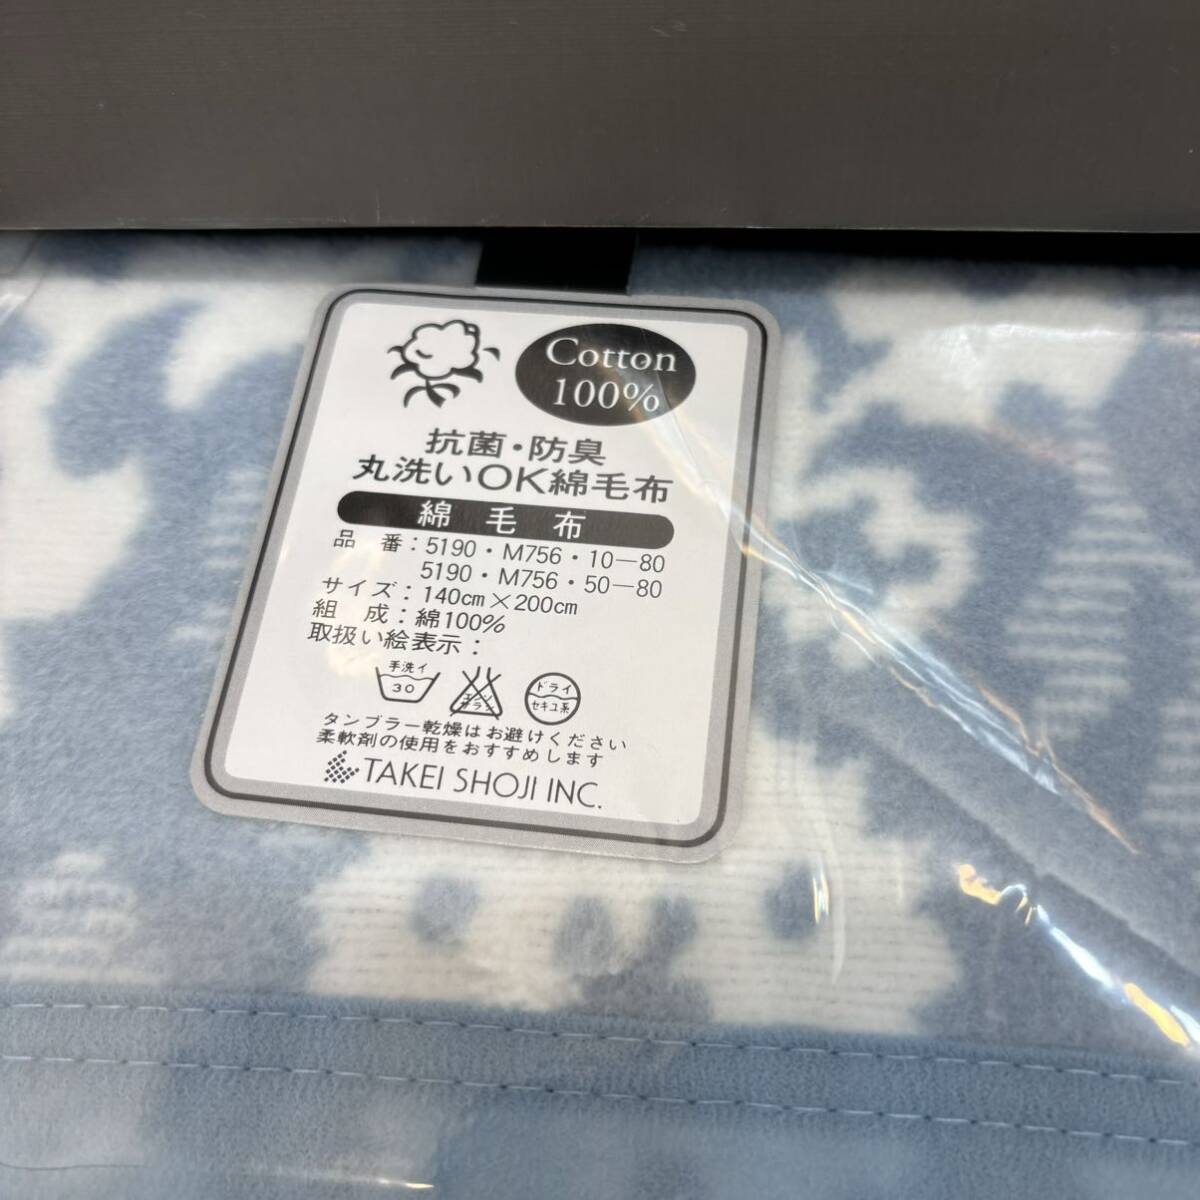  new goods unused Michiko London cotton blanket single light blue blue blue cotton 100% 140×200.